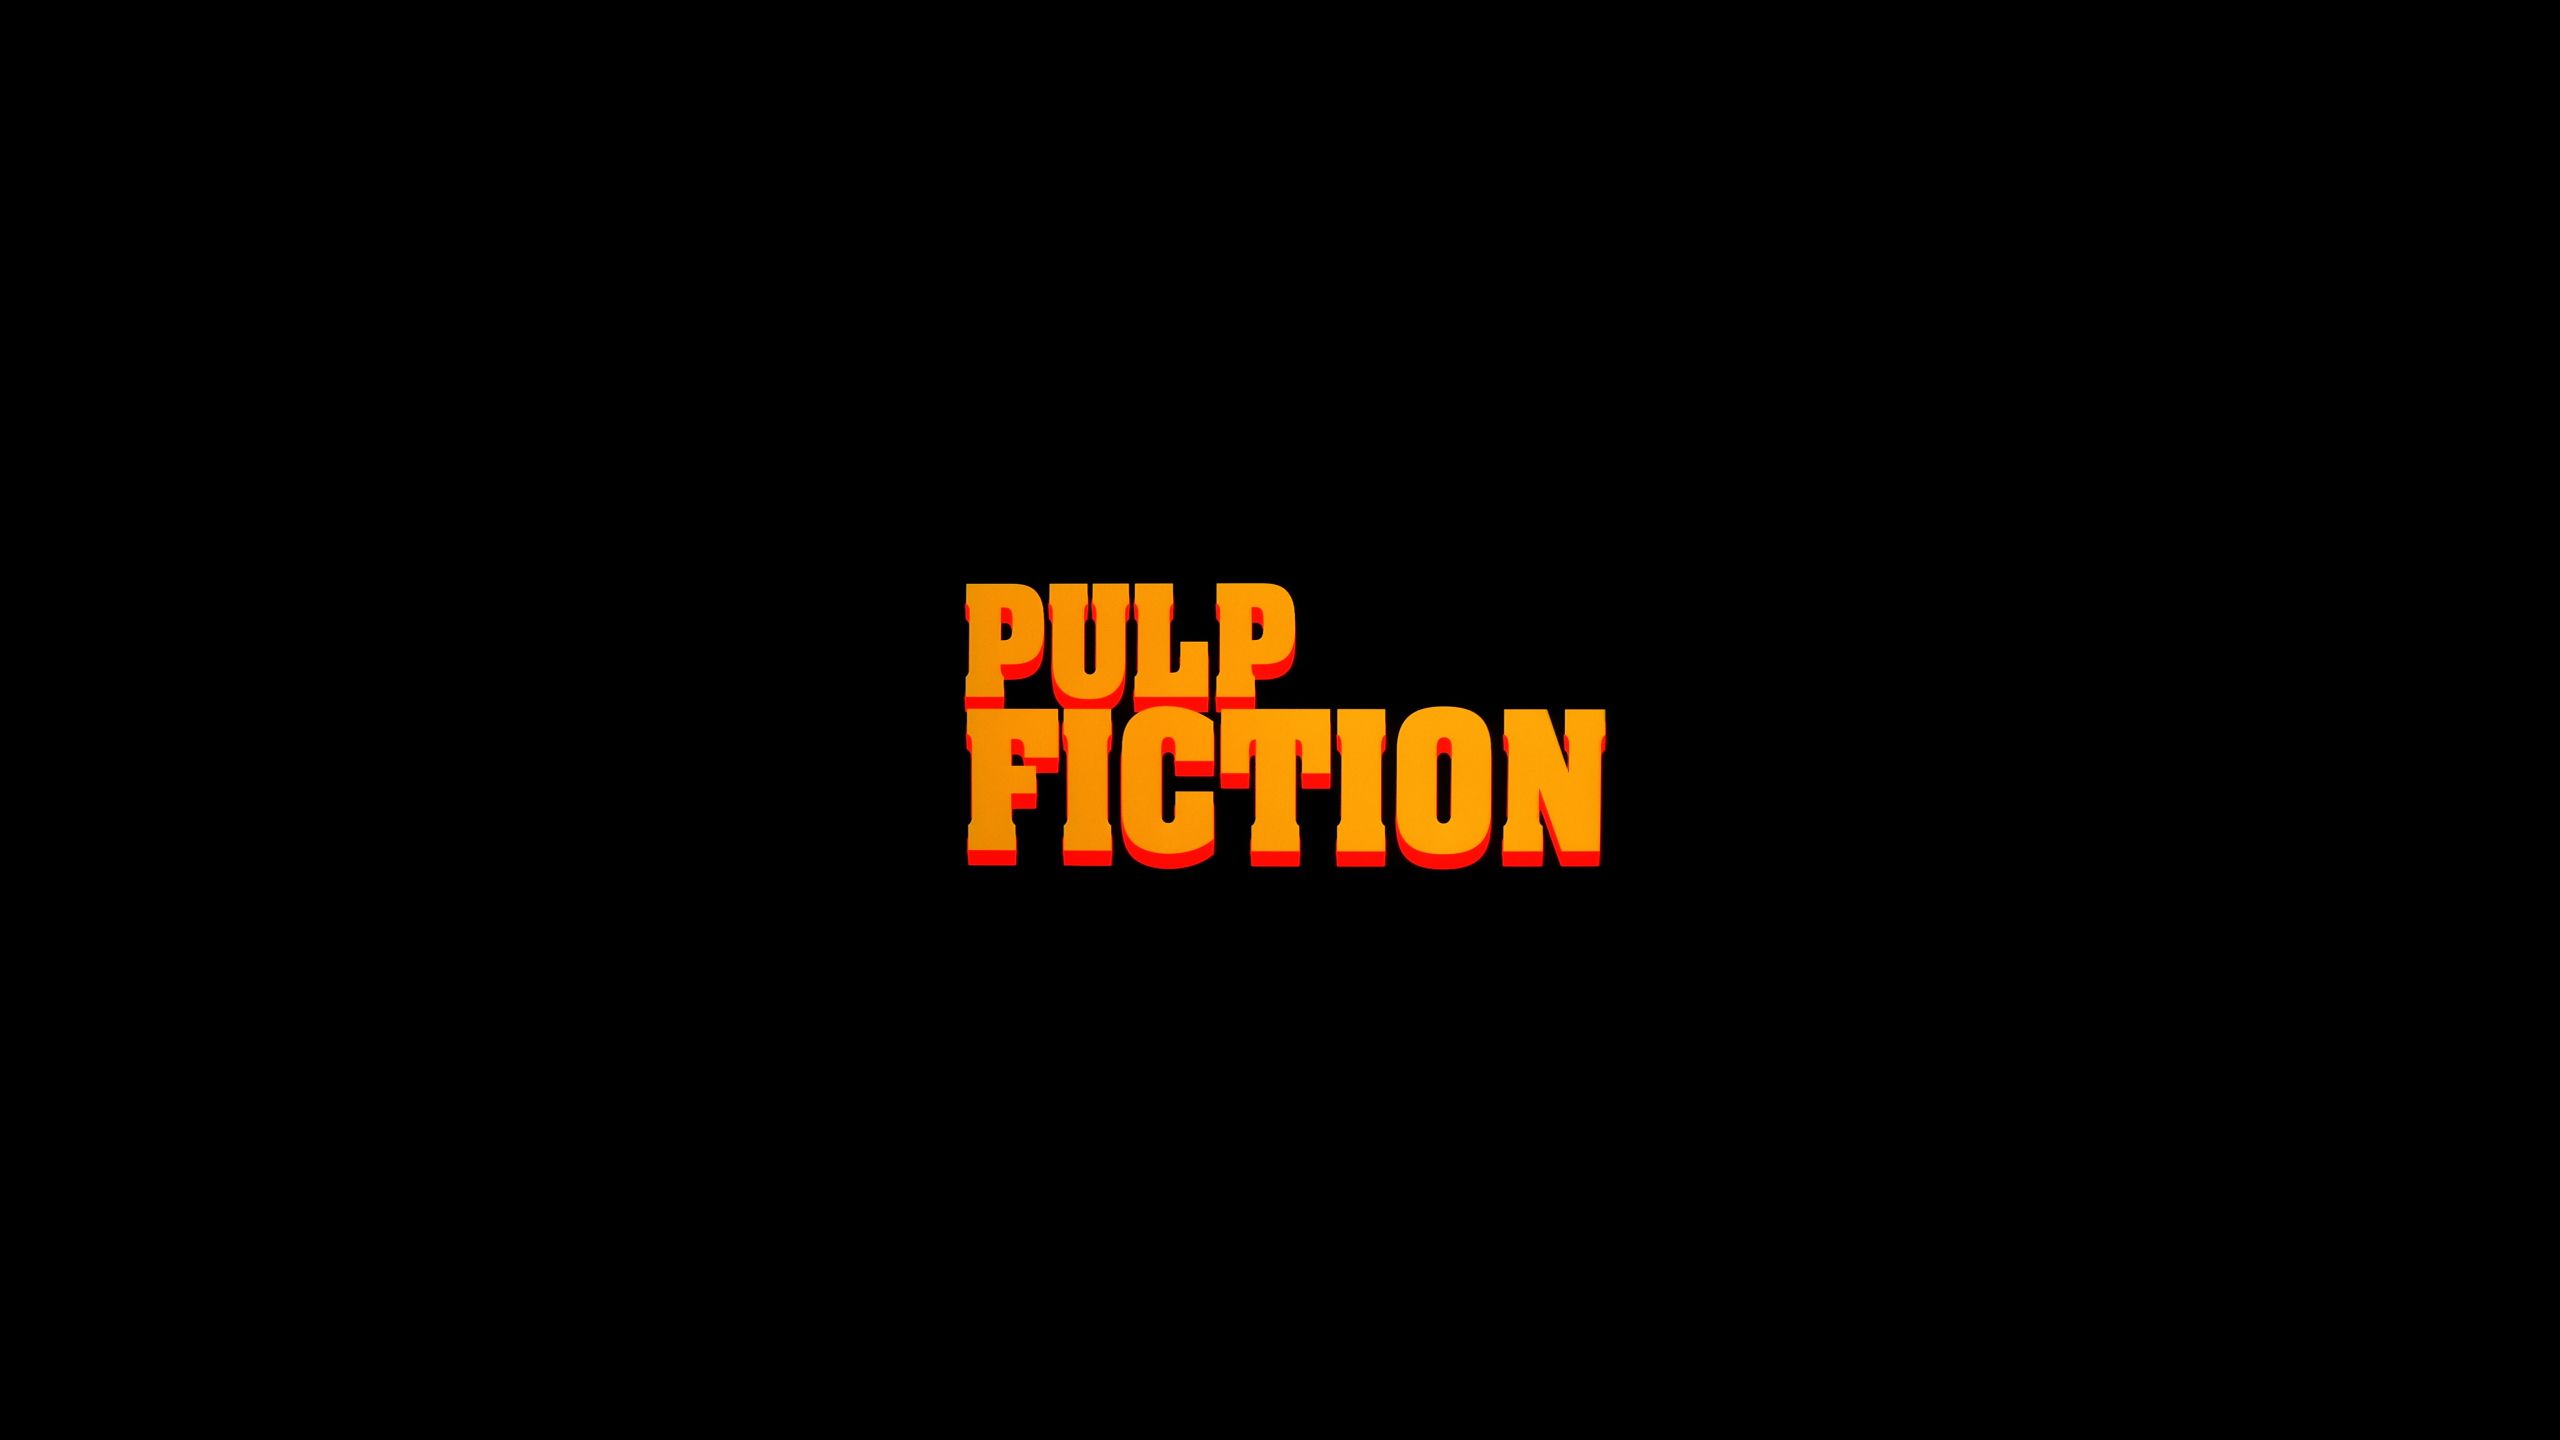 Pulp Fiction Computer Wallpapers, Desktop Backgrounds 1280x800